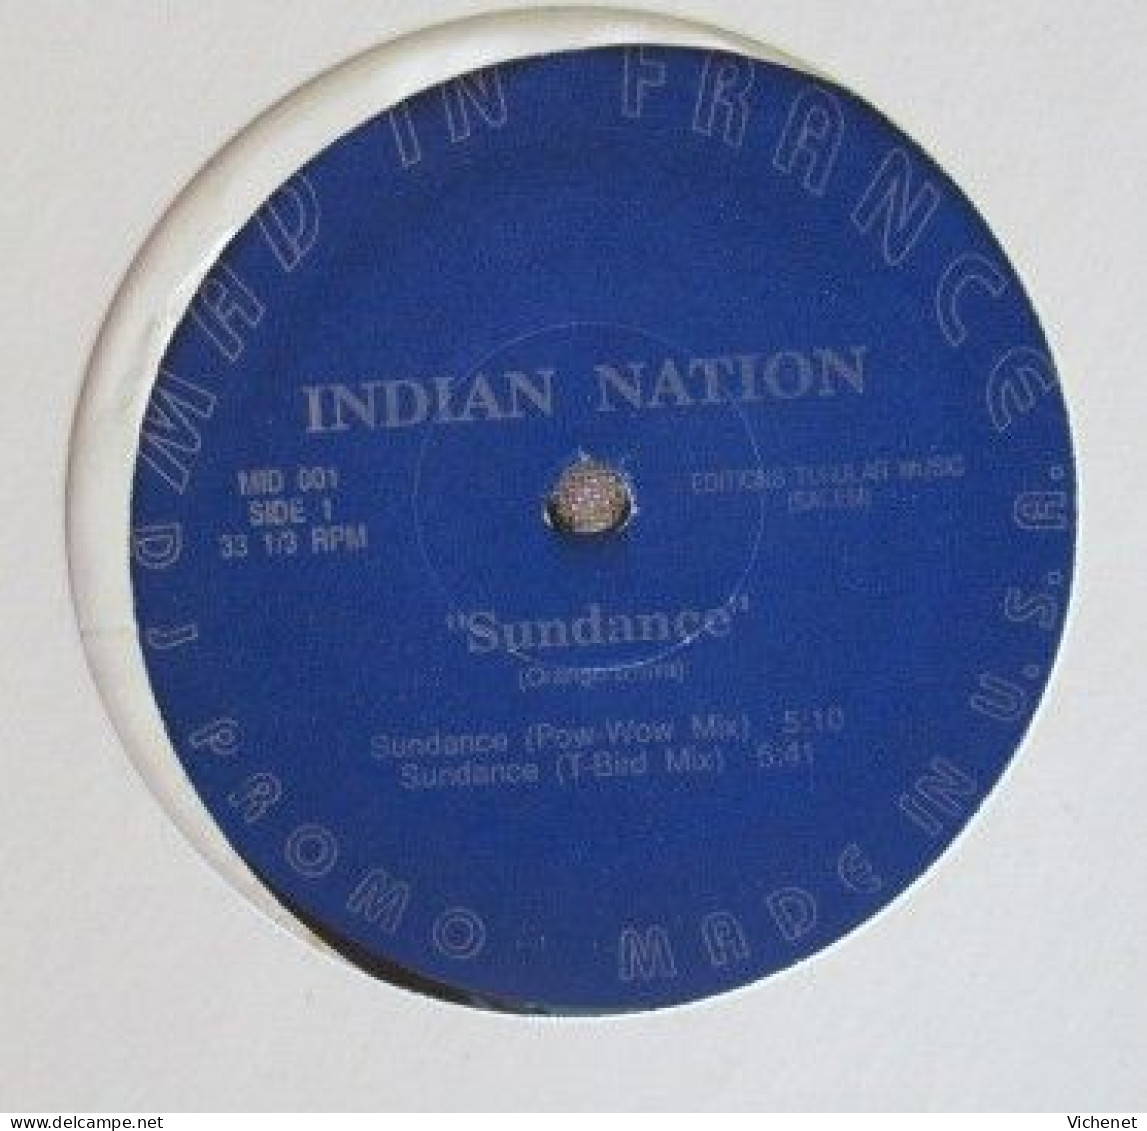 Indian Nation – Sundance - Maxi - 45 Rpm - Maxi-Single